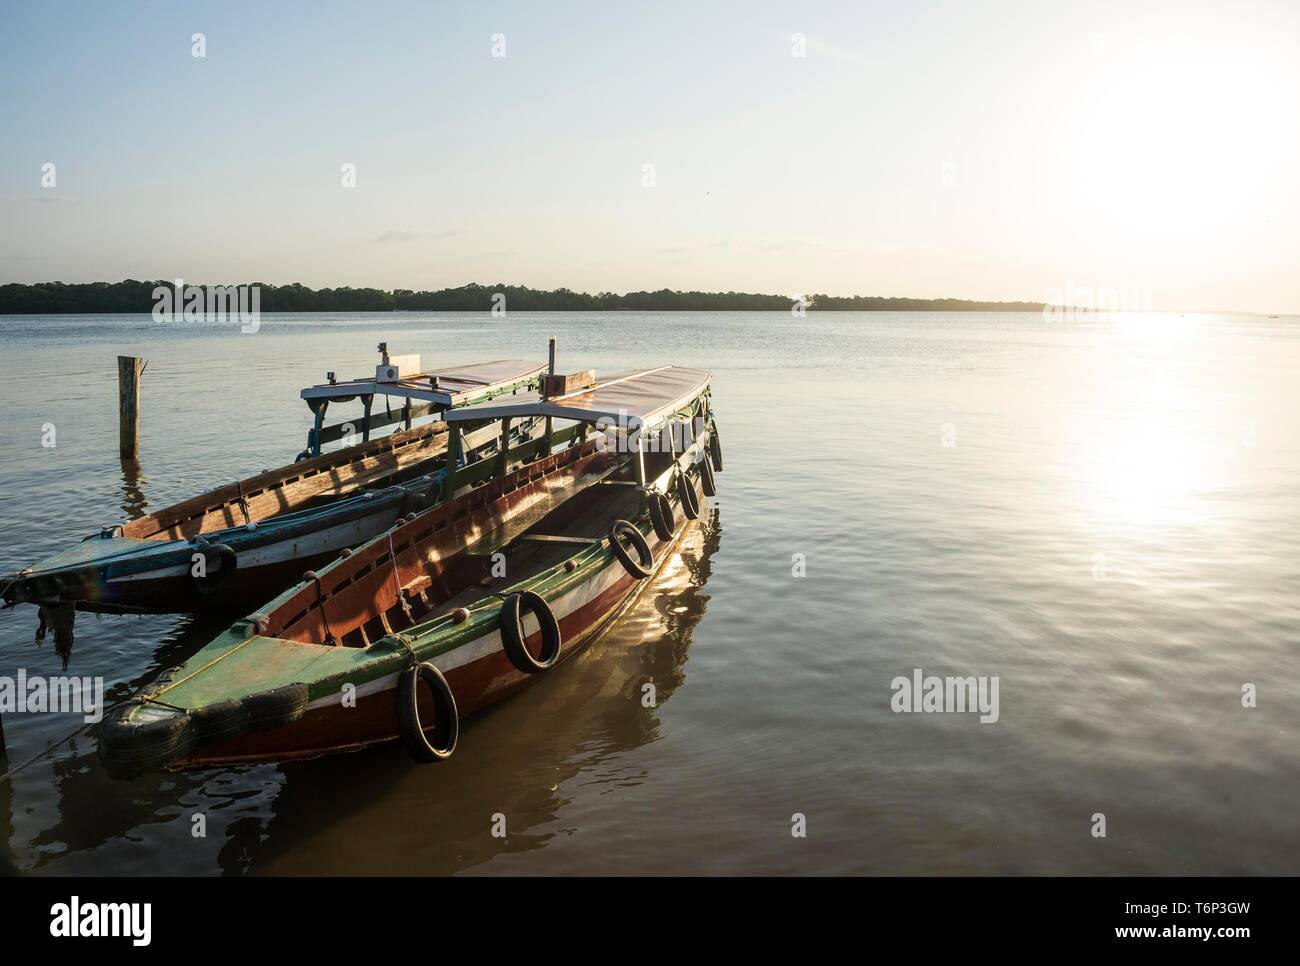 Boats at sunset on the Suriname river near Paramaribo, Suriname Stock Photo